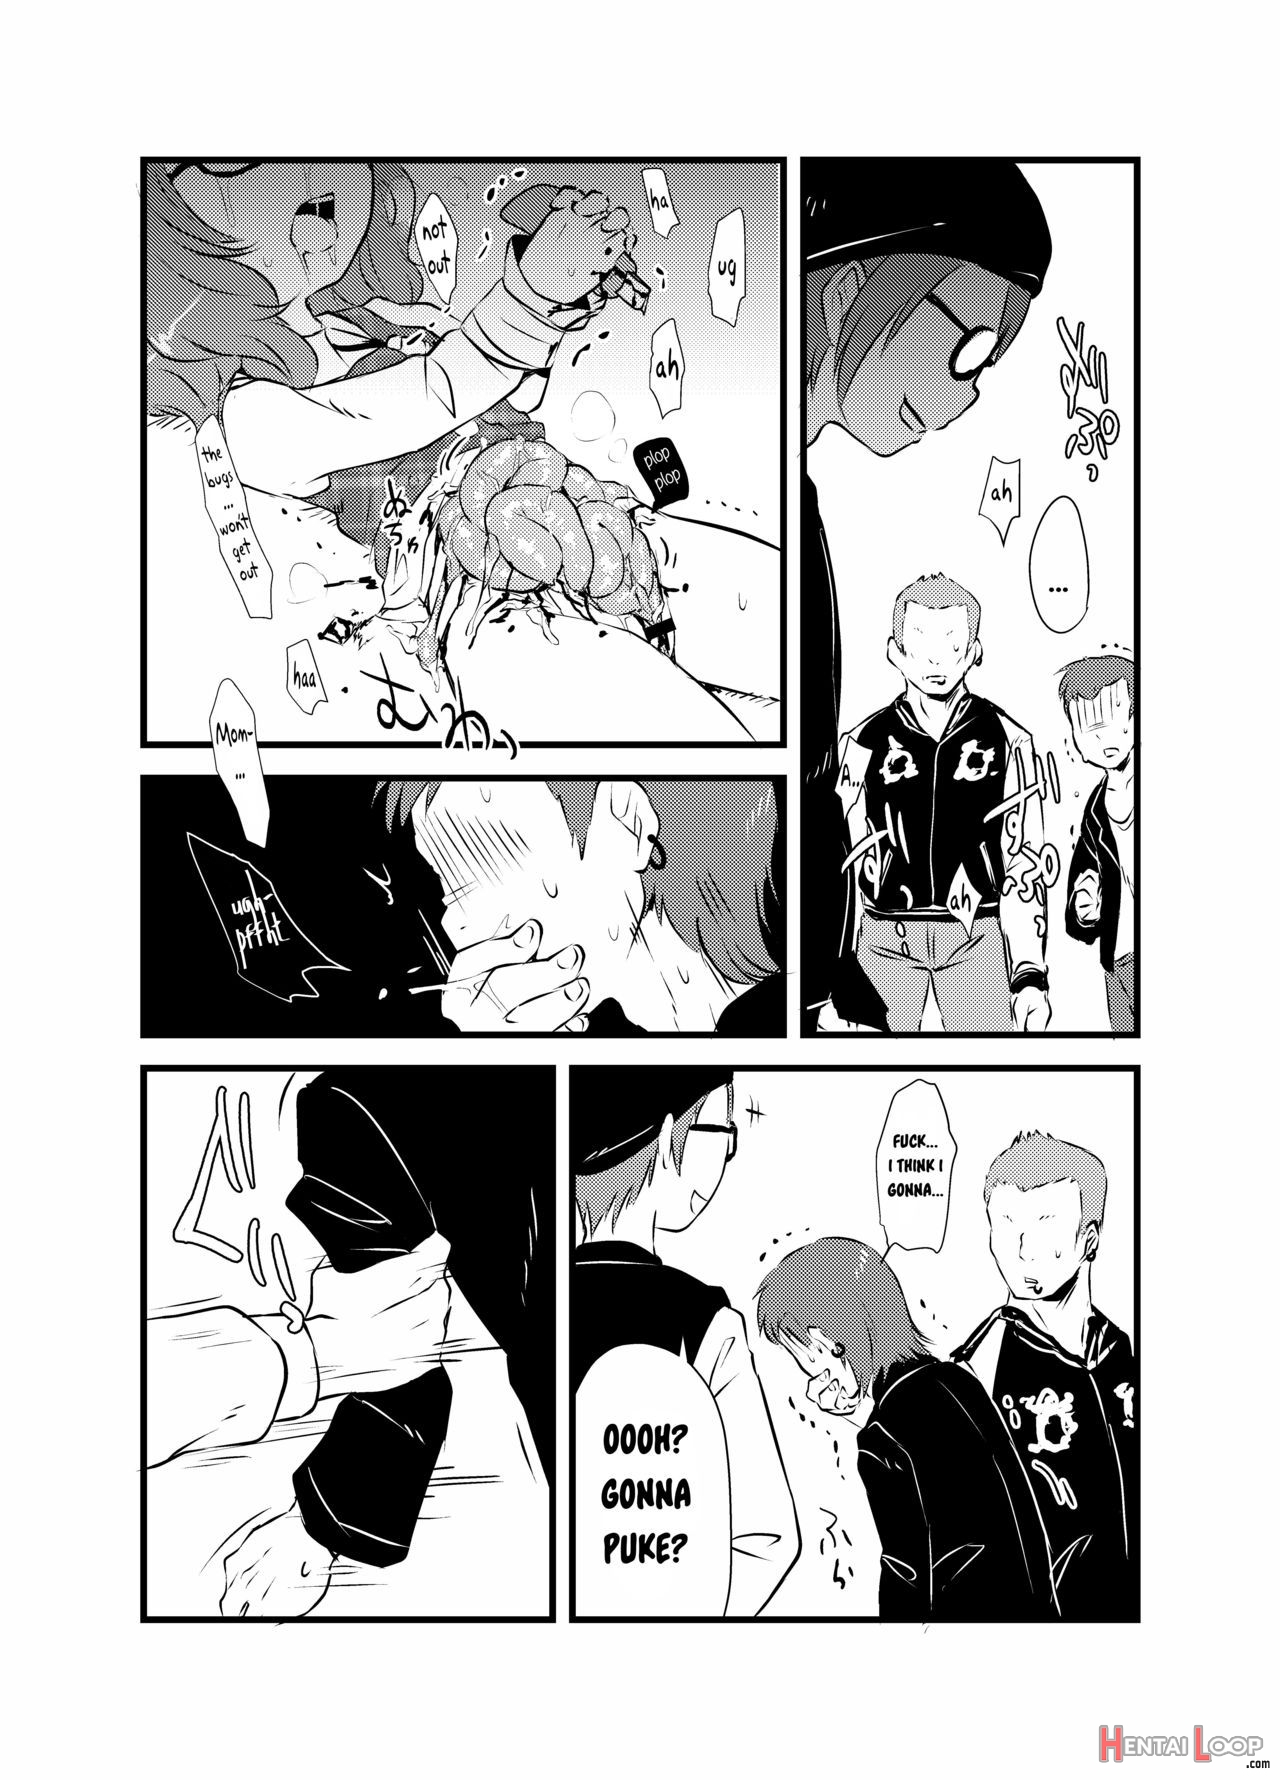 Sumirekochan's Pussy page 19